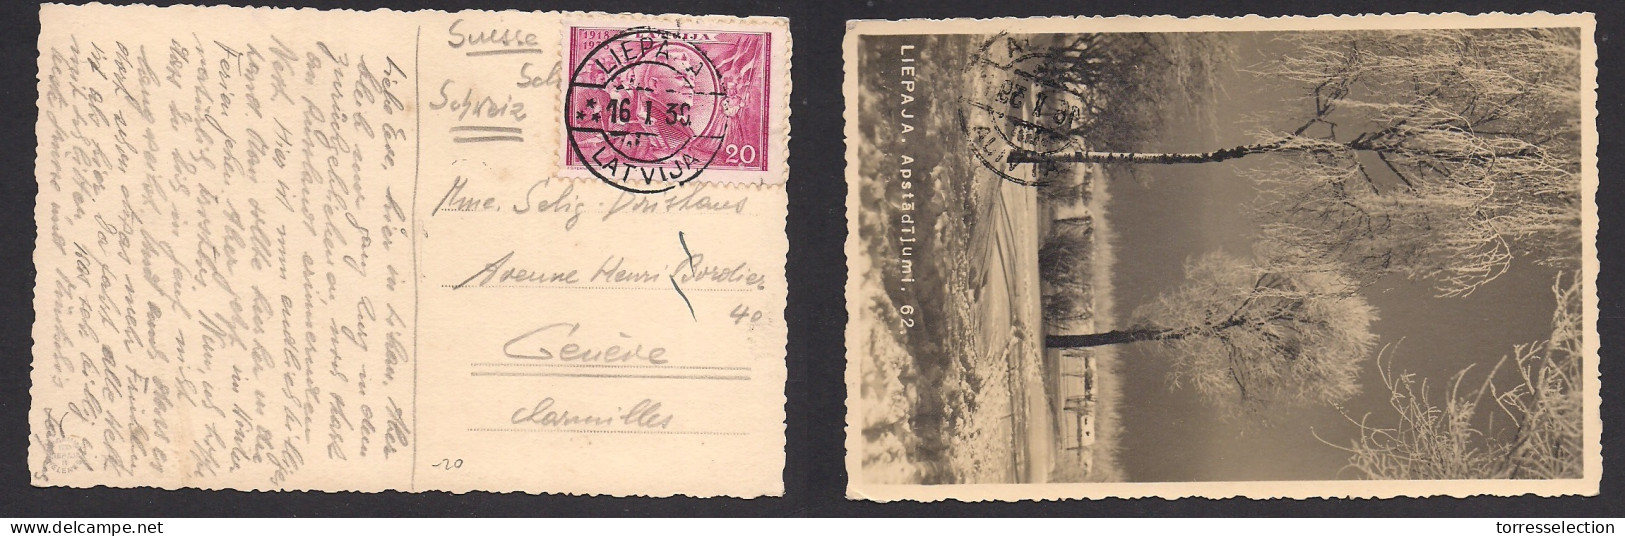 LATVIA. 1939 (16 Jan) Liepaja - Switzerland, Geneve. Single 20c Violet Fkd Ppc. Fine. XSALE. - Latvia